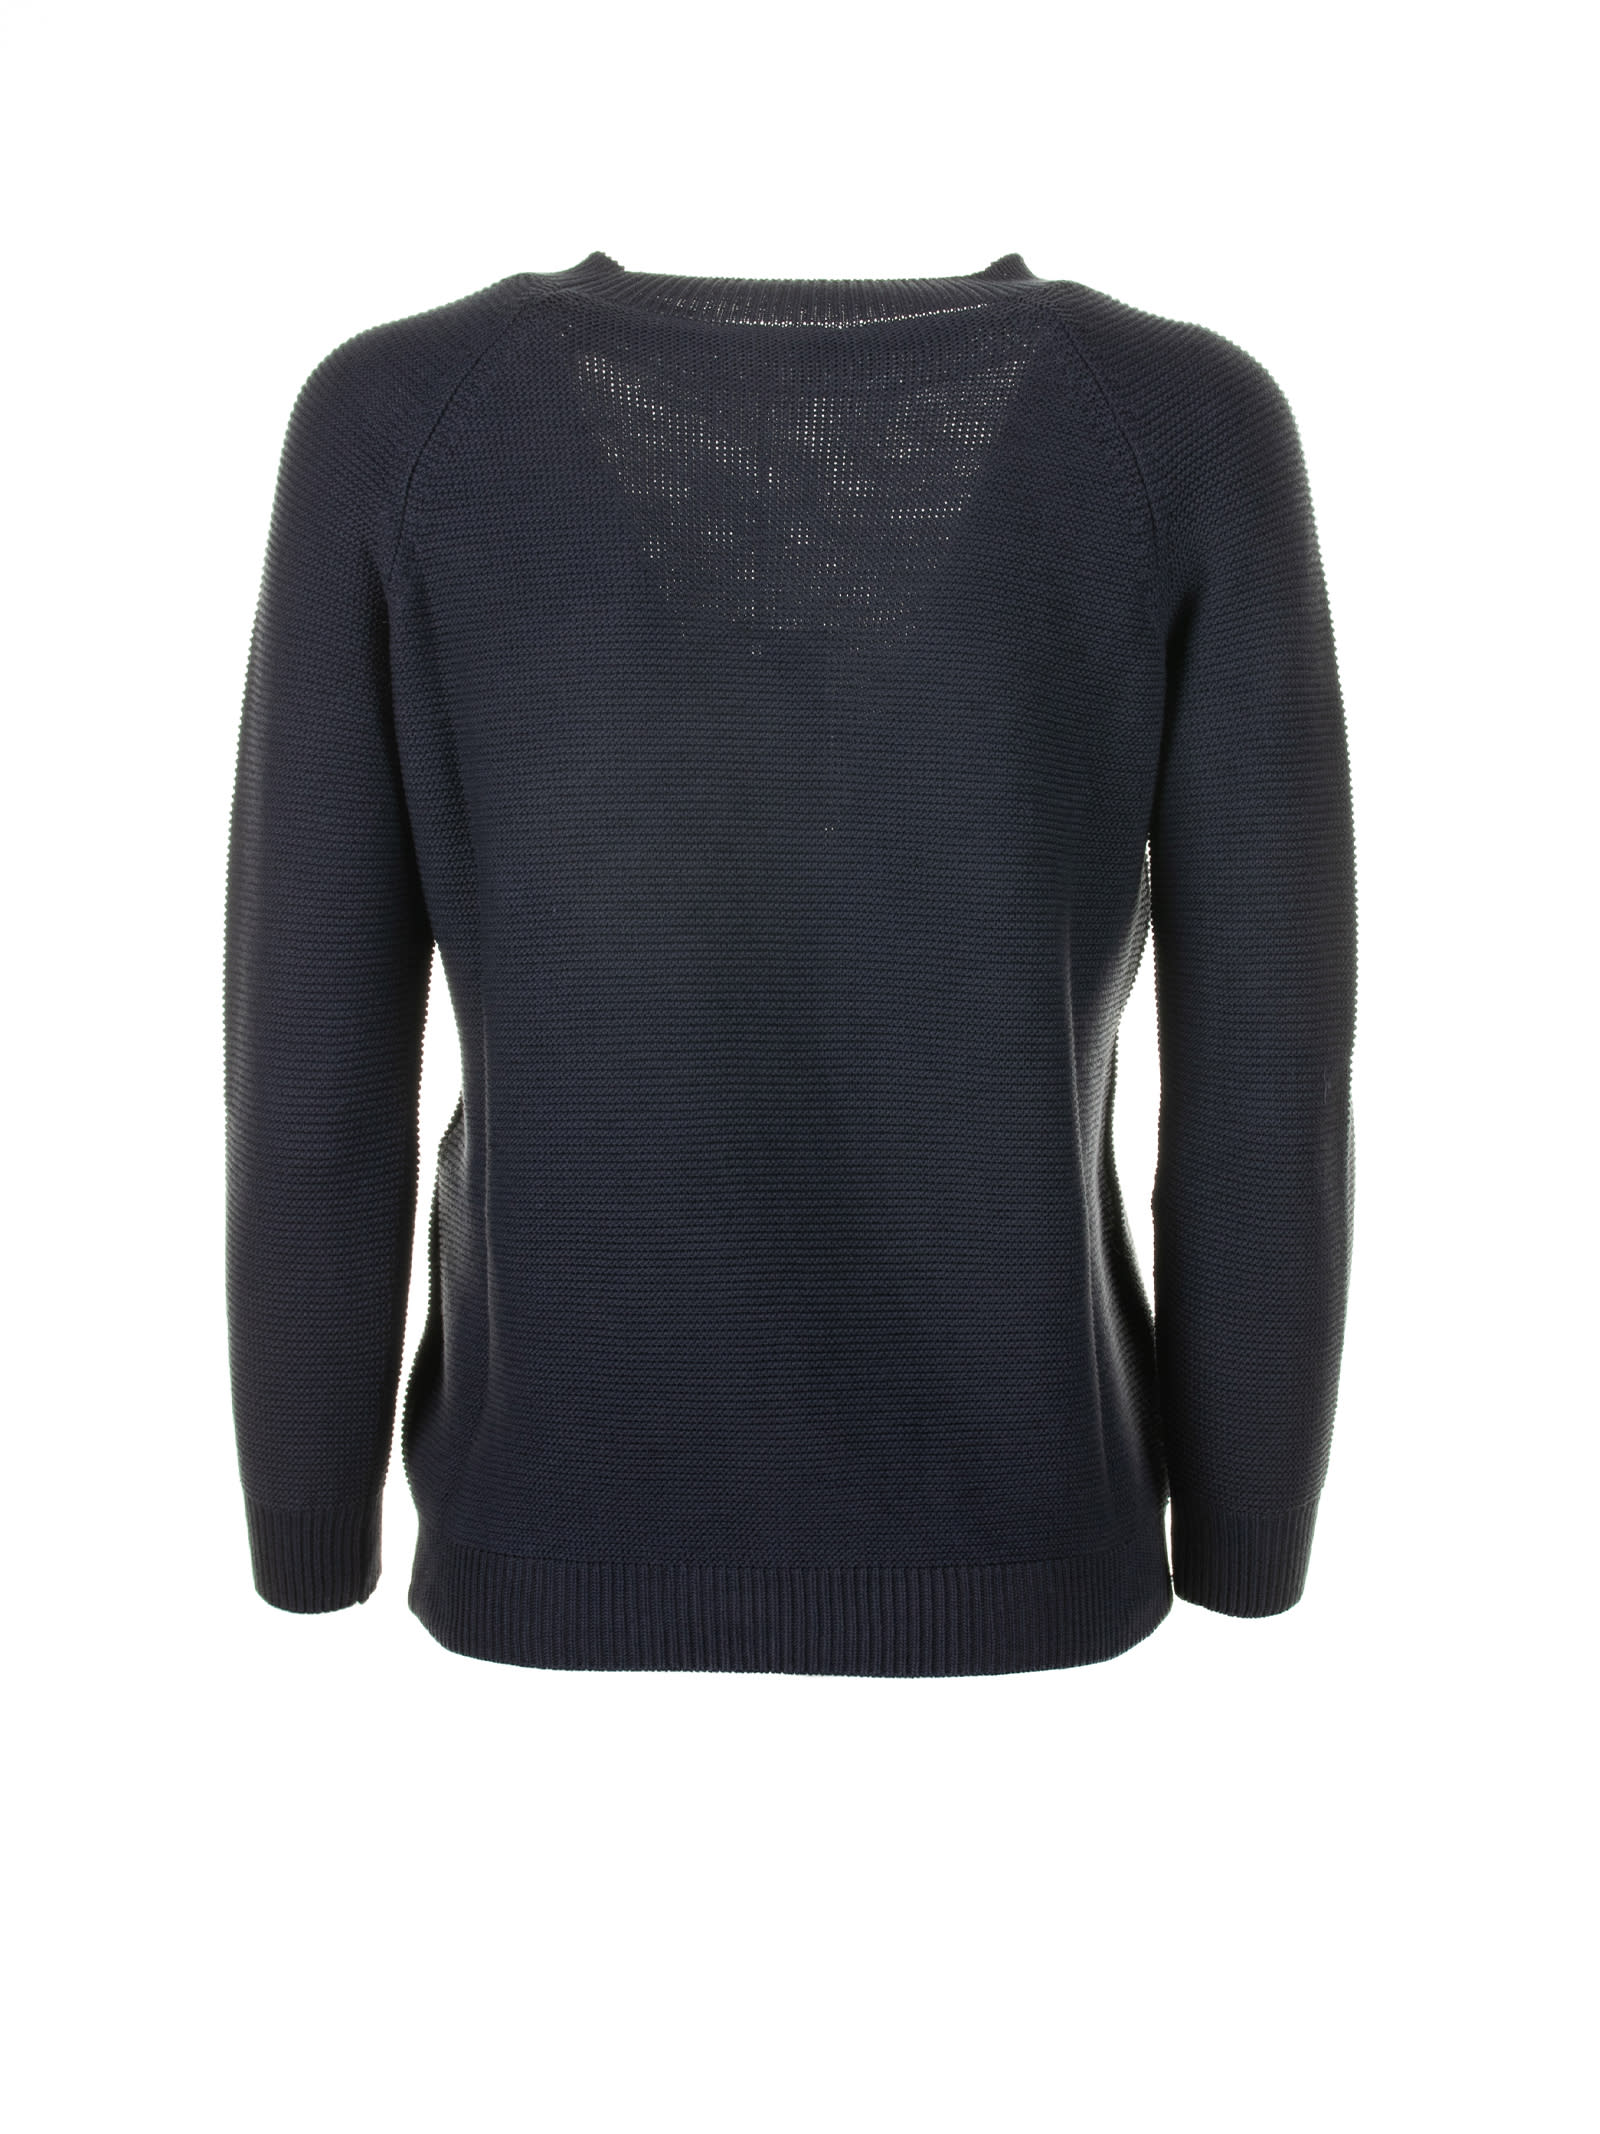 Shop Weekend Max Mara Soft Navy Blue Cotton Sweater